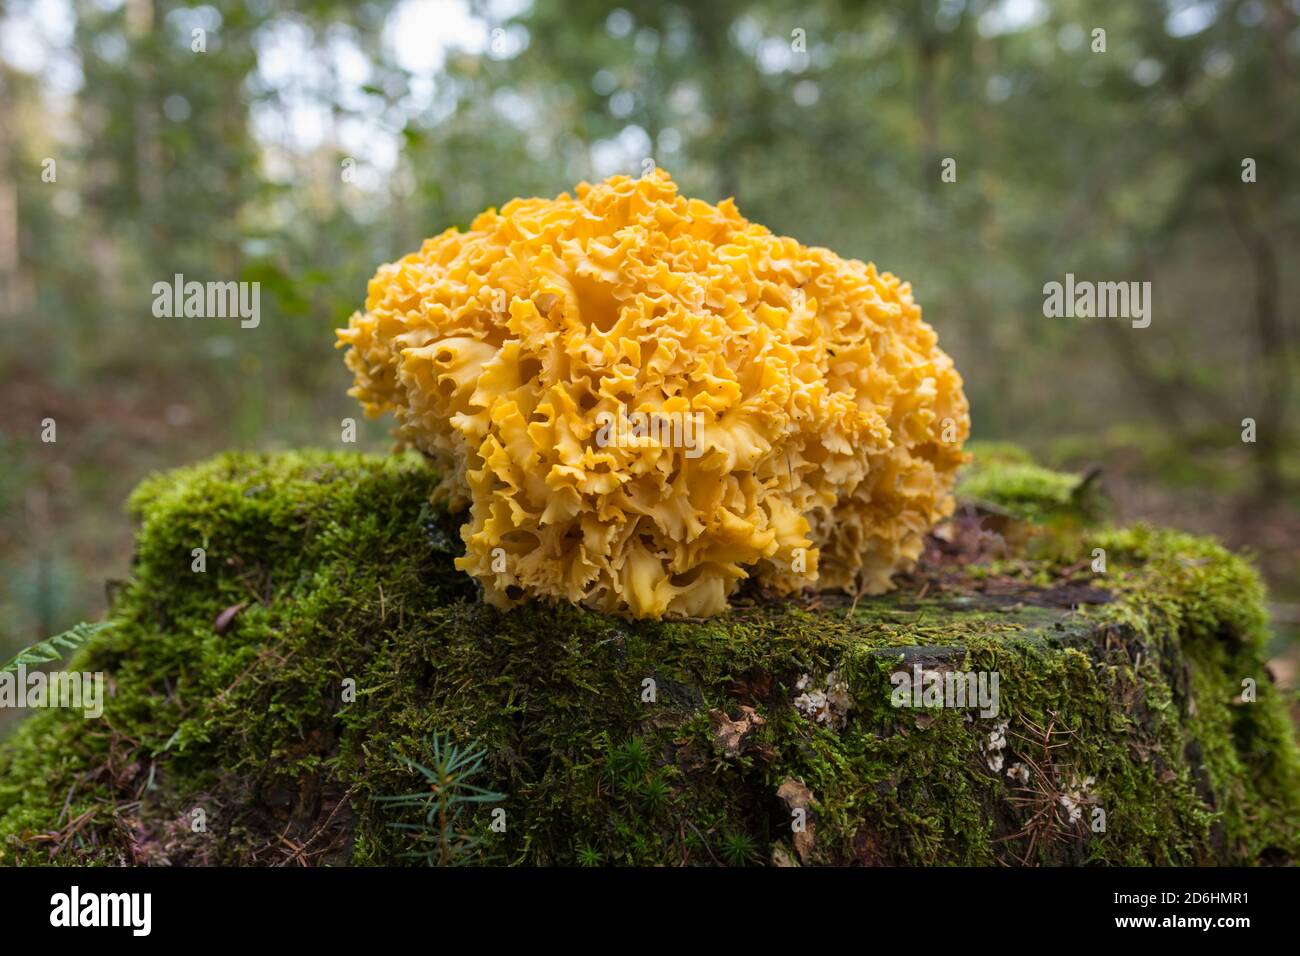 Cauliflower mushroom growing on a tree stump in autumn, Netherlands Stock Photo